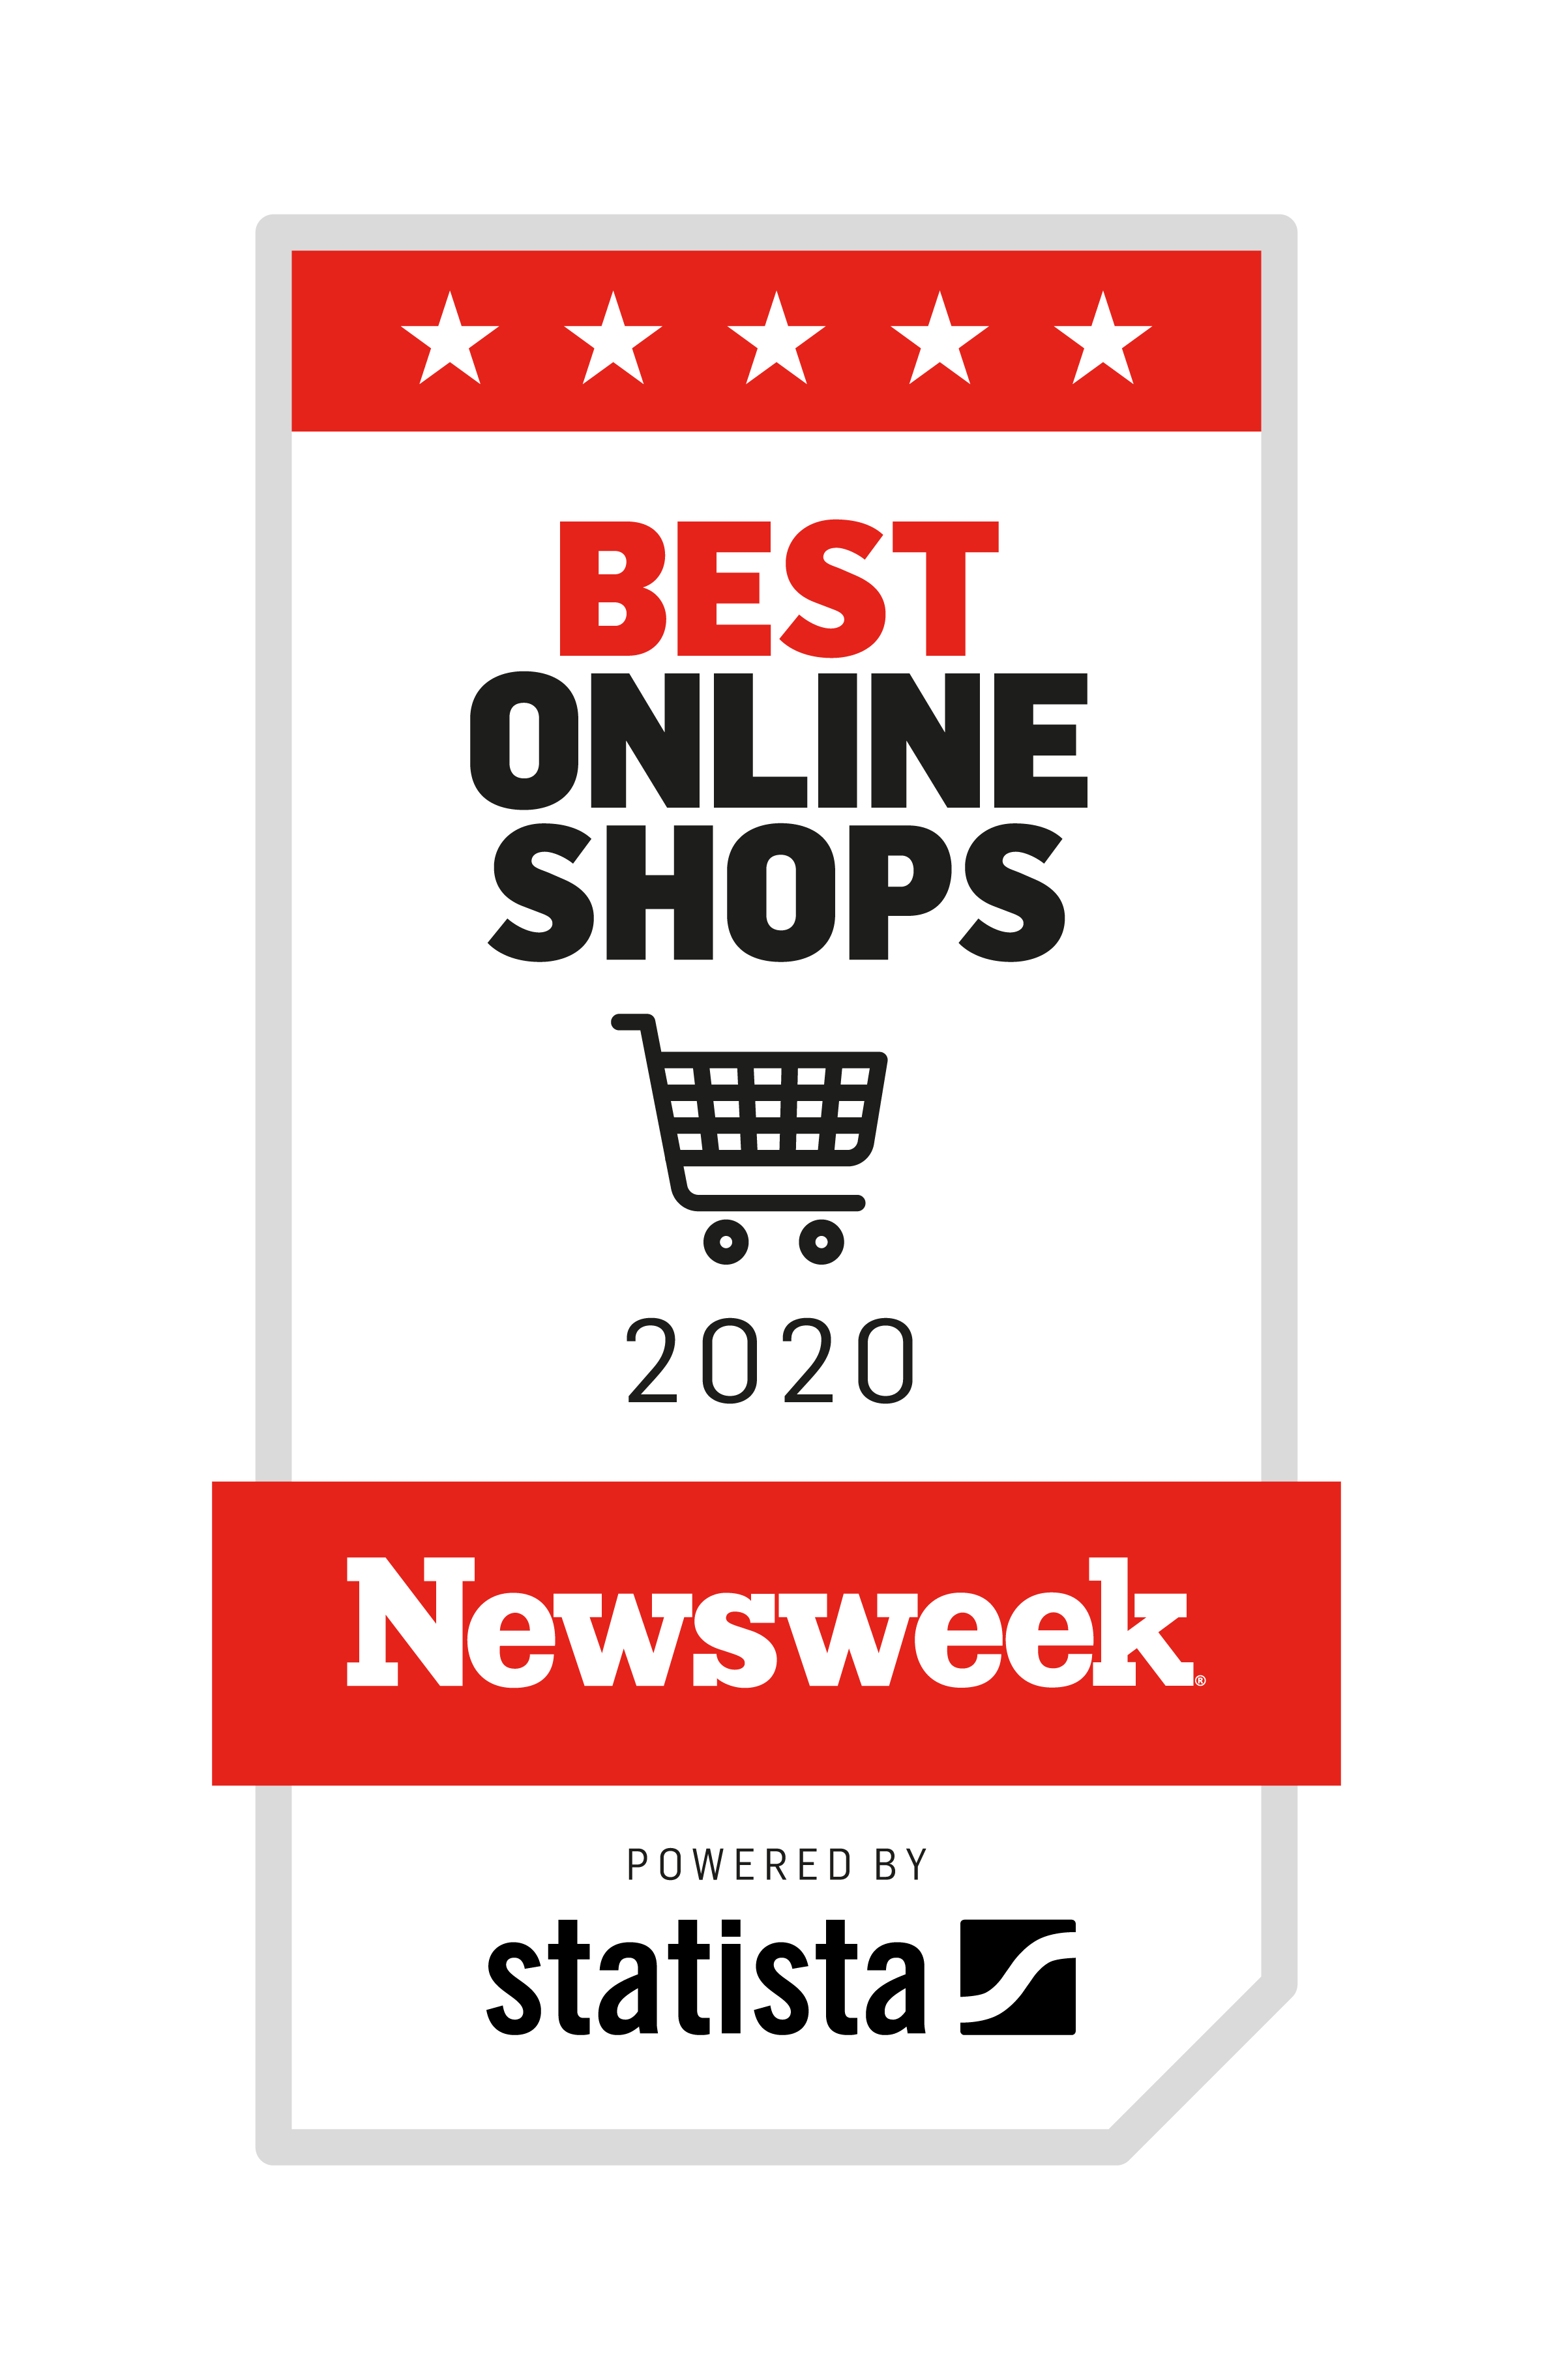 Best Online Shops of 2020 Newsweek banner